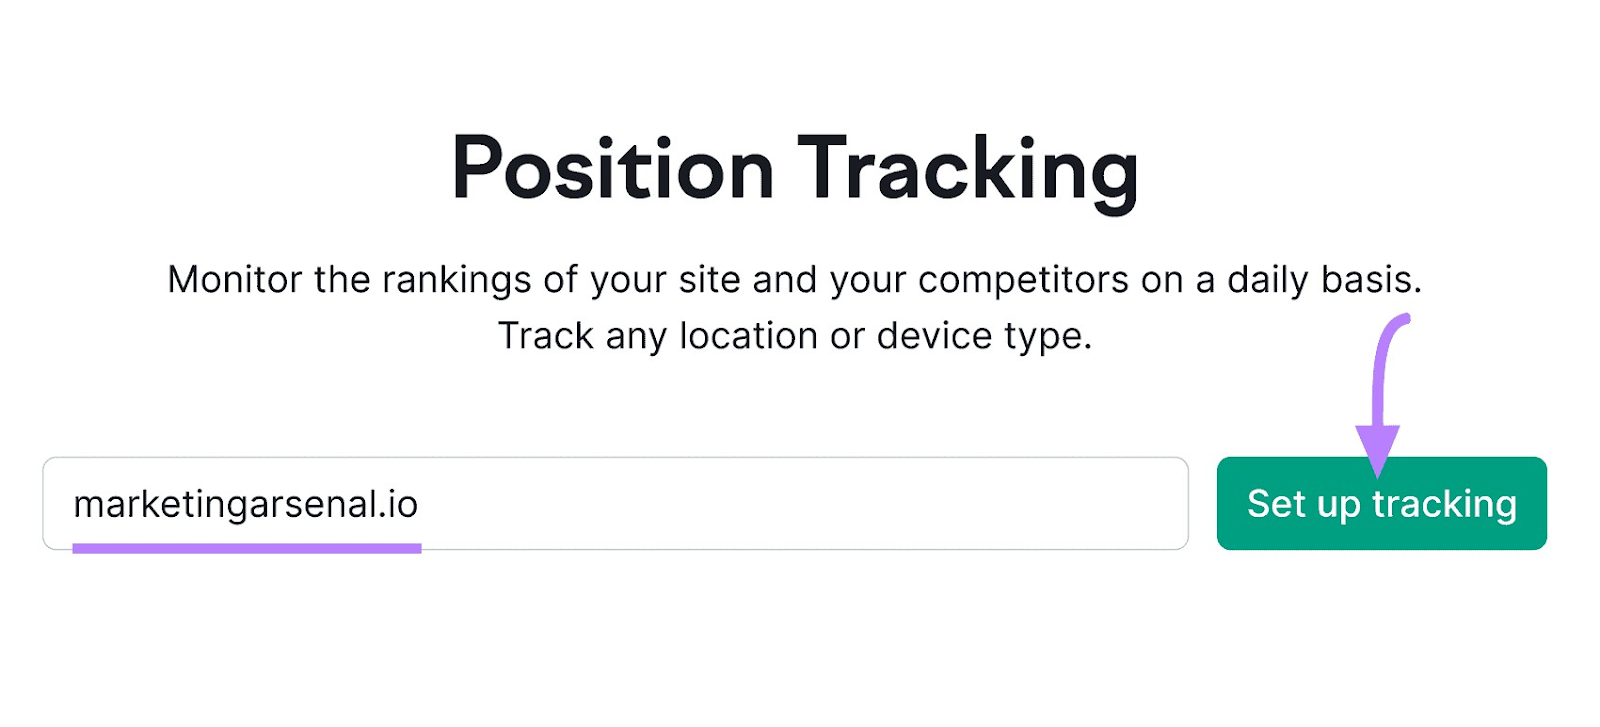 "marketingarsenal.io" entered into the Position Tracking tool search bar